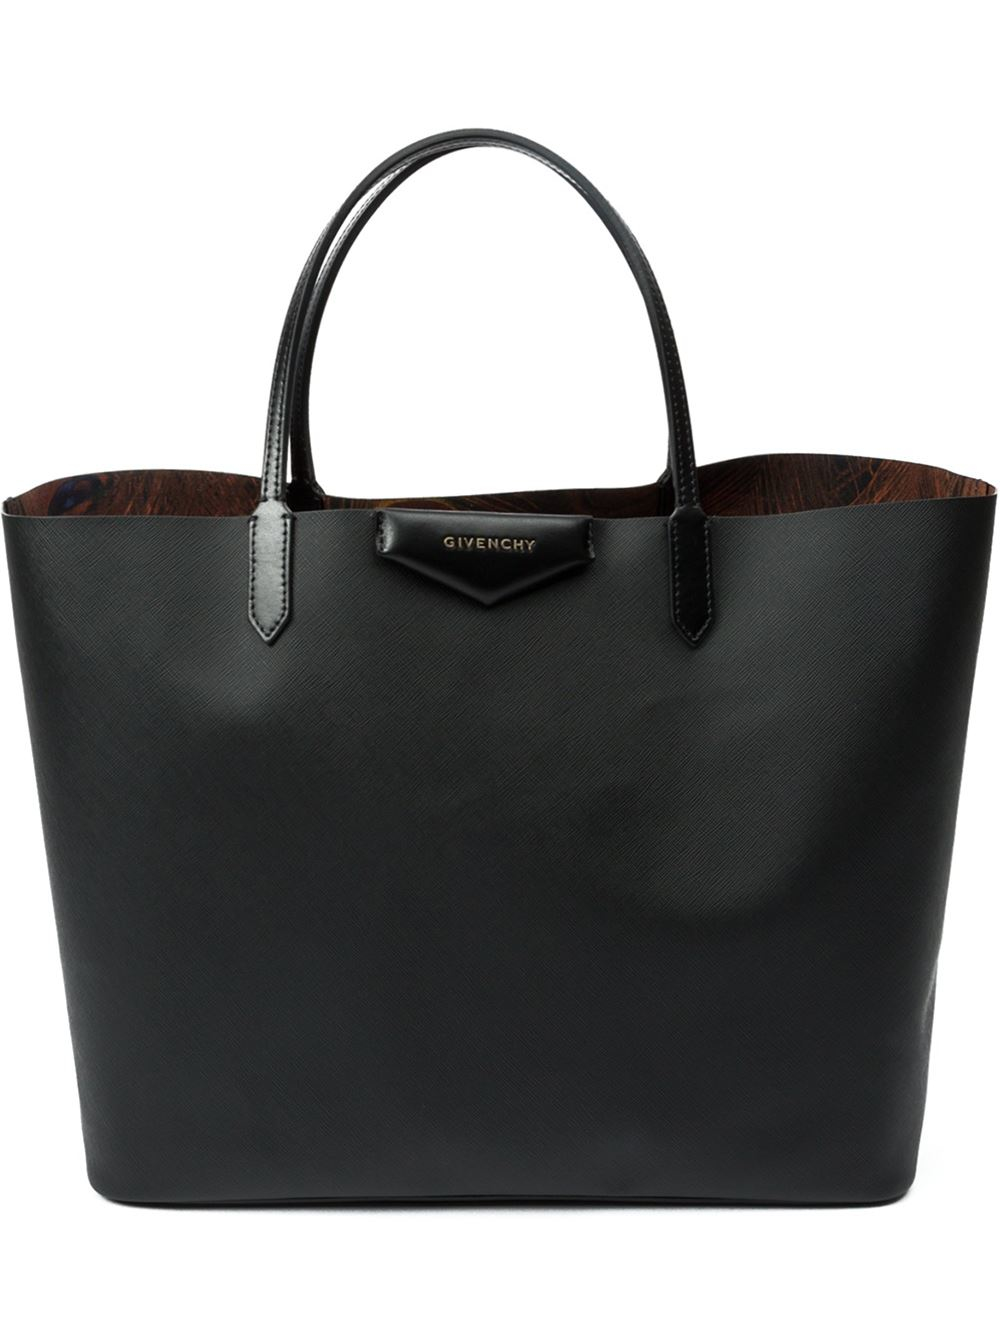 Givenchy 'antigona' Shopper Tote in Black | Lyst